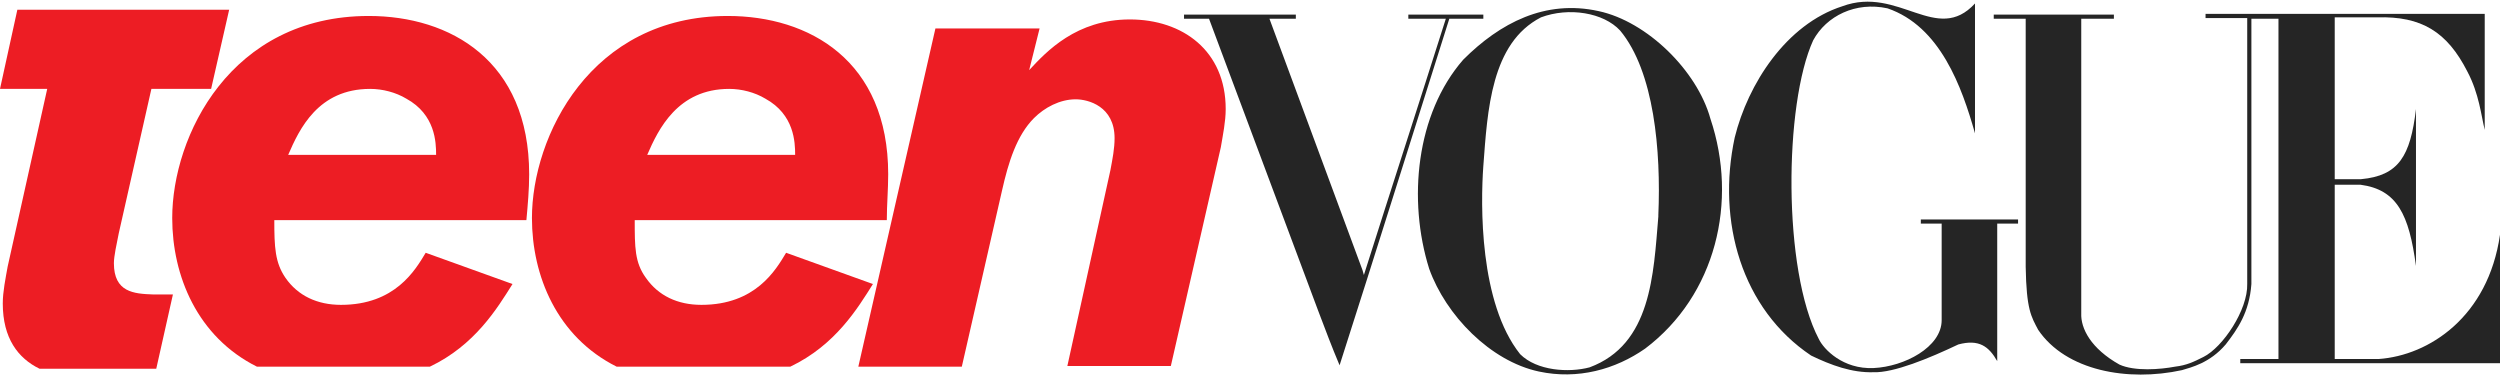 TeenVogue Logo.png